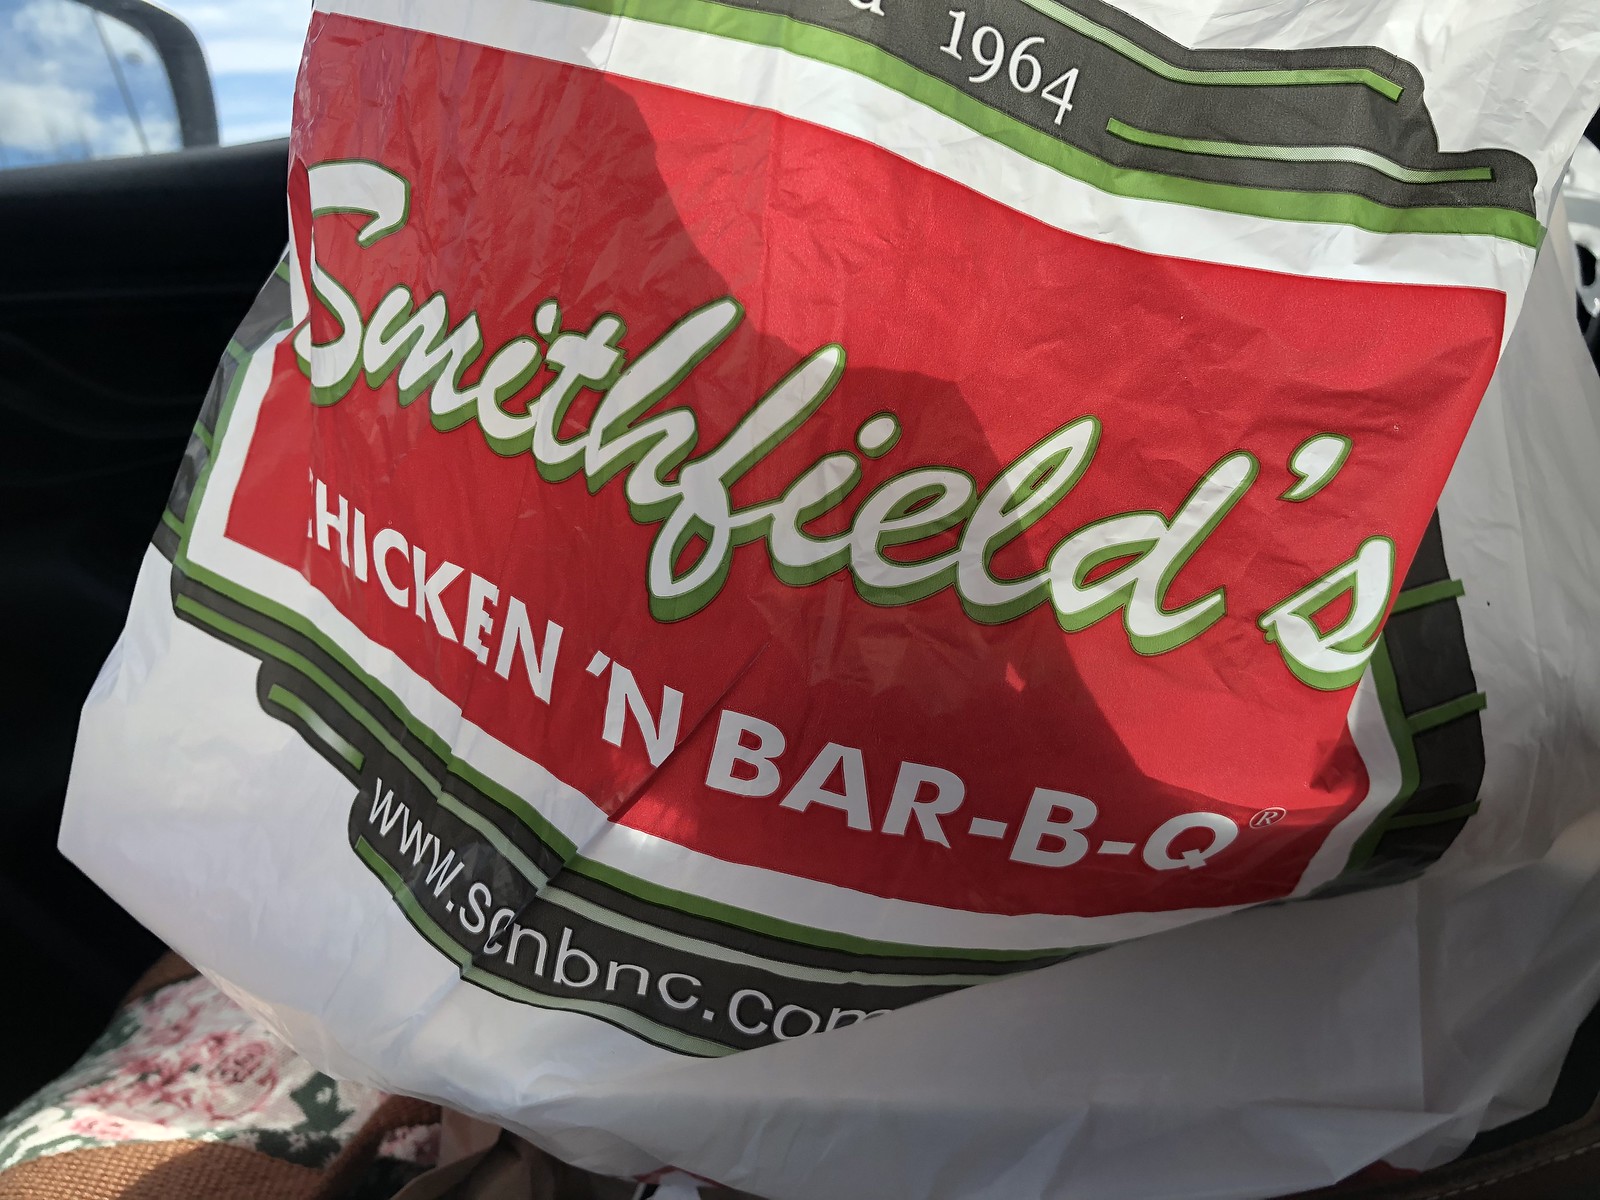 Smithfield chicken & BBQ